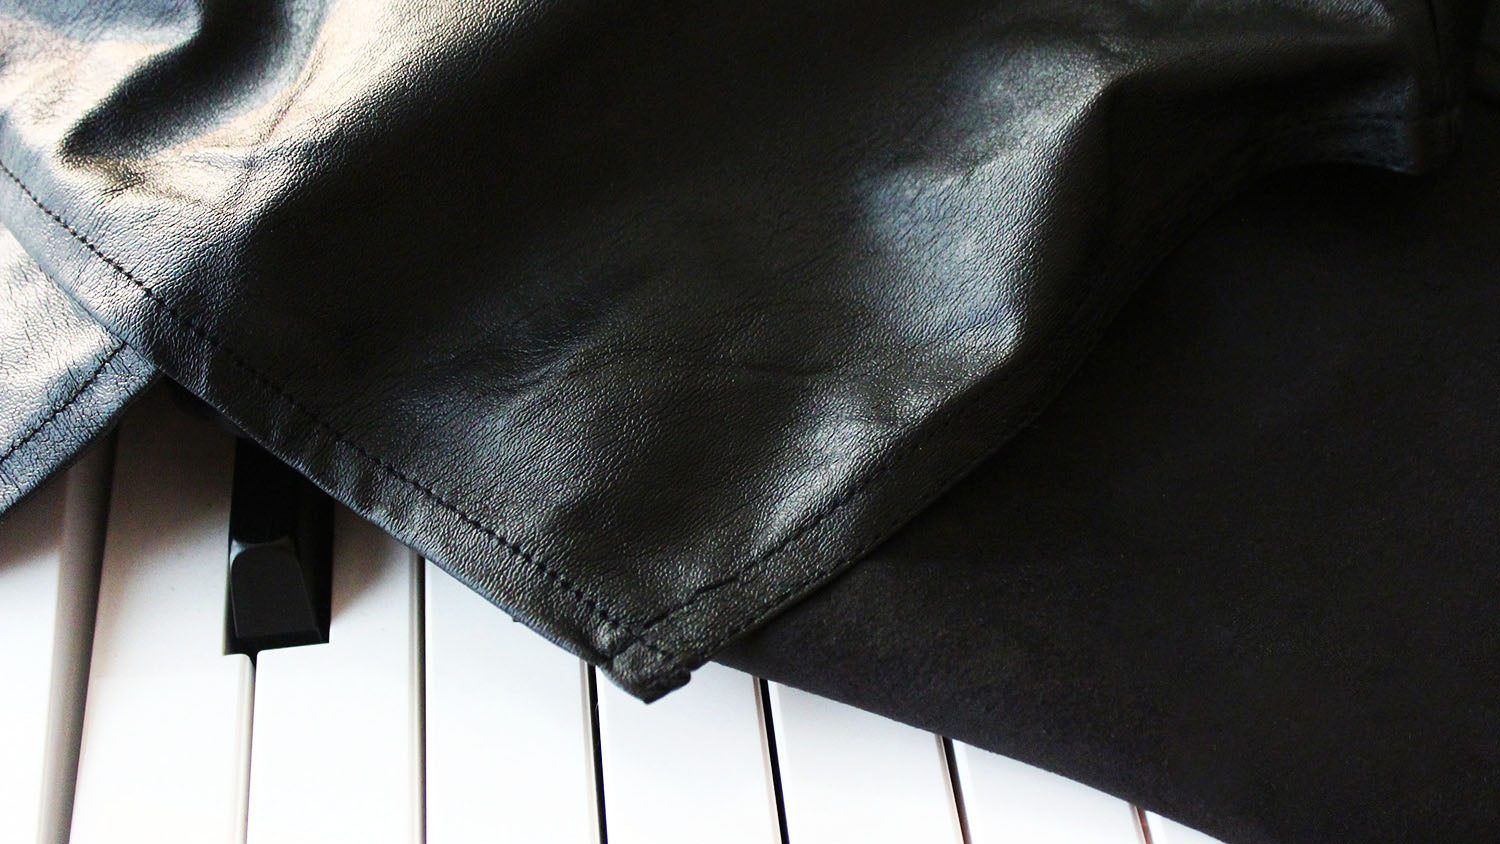 Digital piano cover in black leatherette